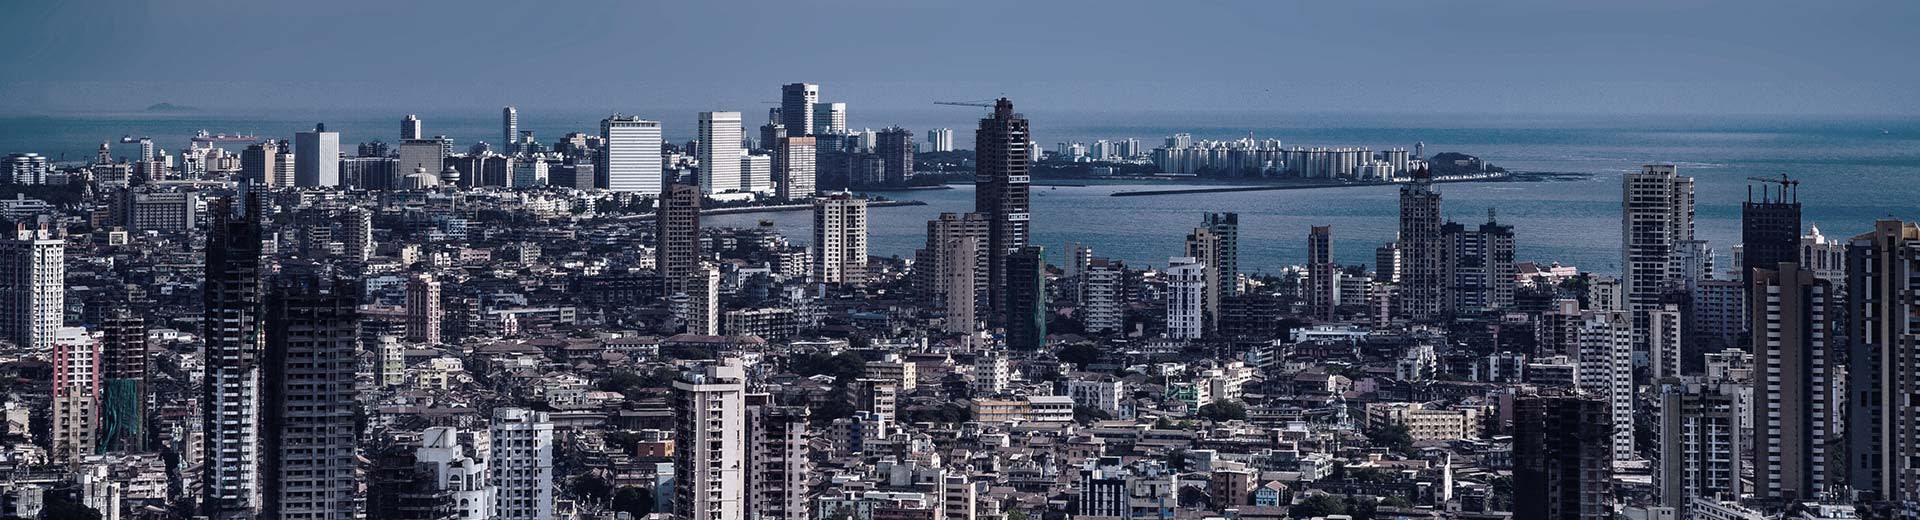 The towering high-rise apartment buildings of Mumbai 